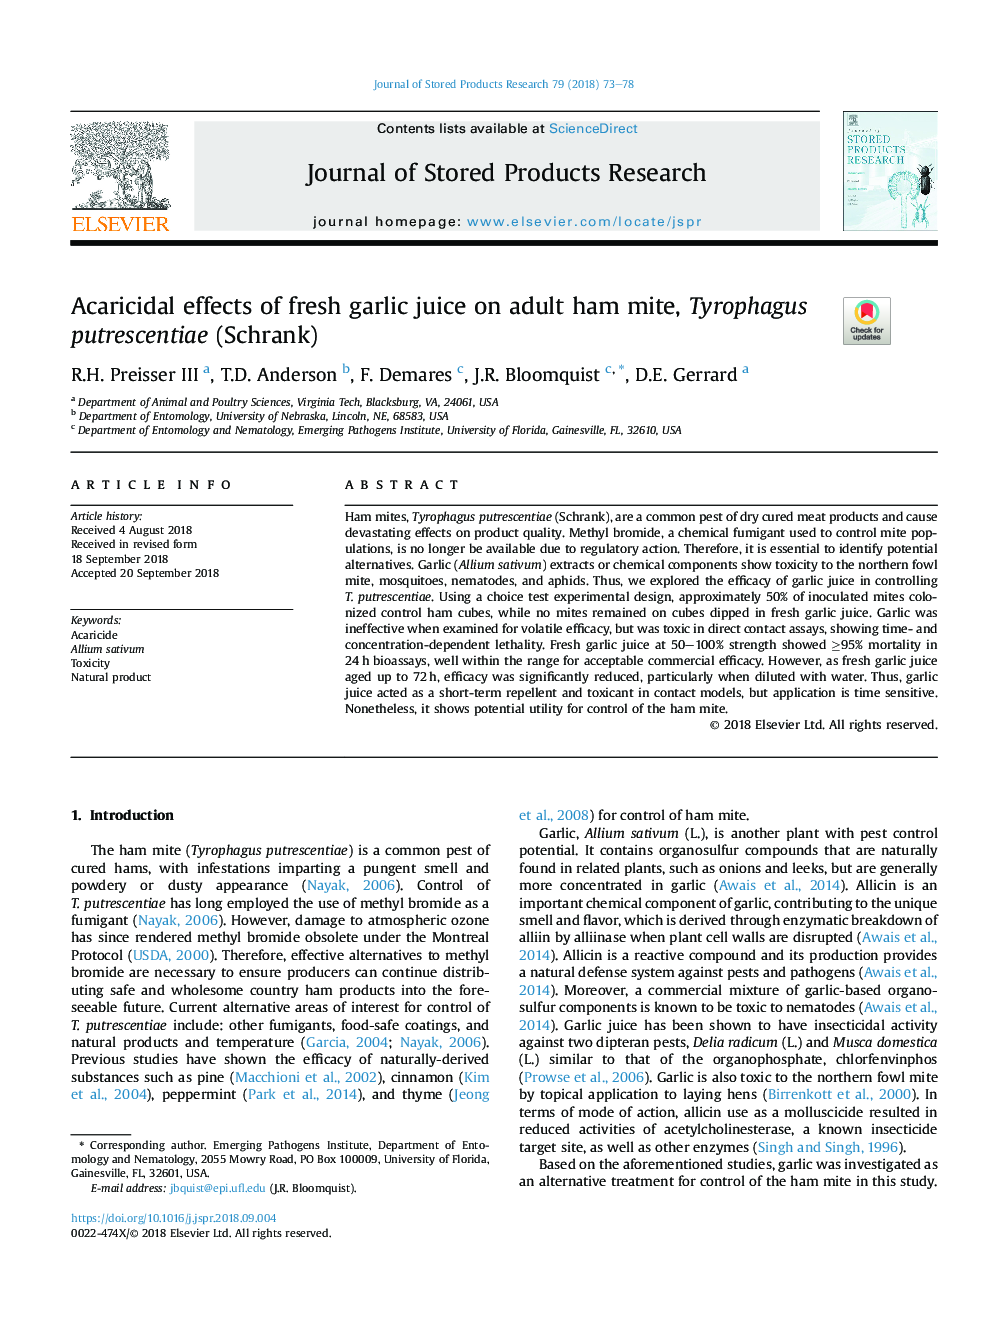 Acaricidal effects of fresh garlic juice on adult ham mite, Tyrophagus putrescentiae (Schrank)